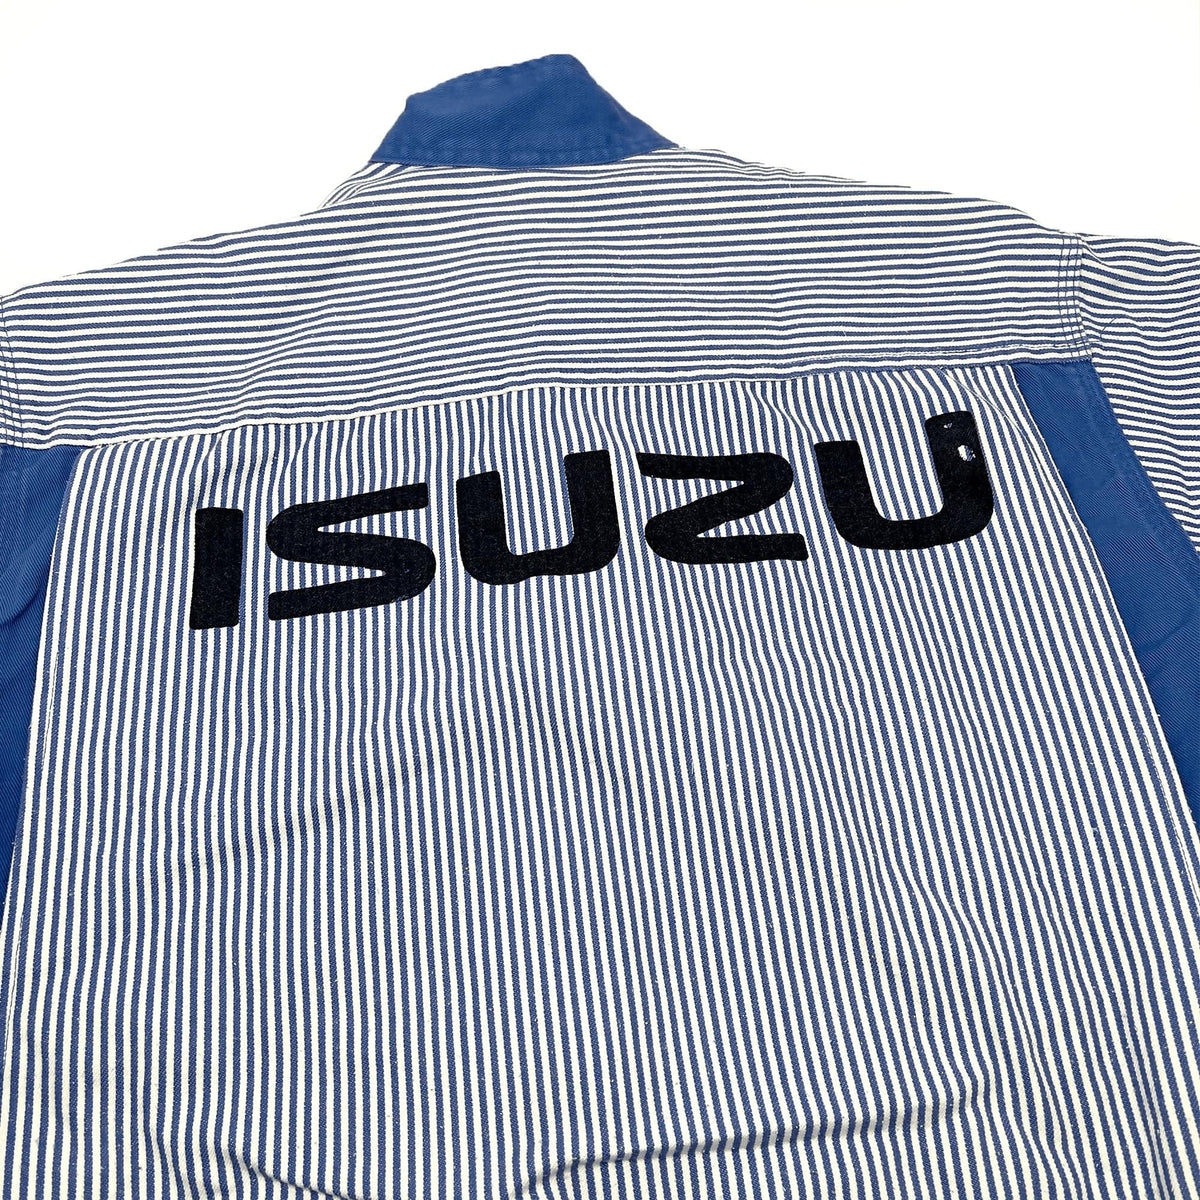 Vintage Showa JDM Isuzu Car Truck Work Tsunagi Coveralls Uniform Pin Stripe Blue - Sugoi JDM